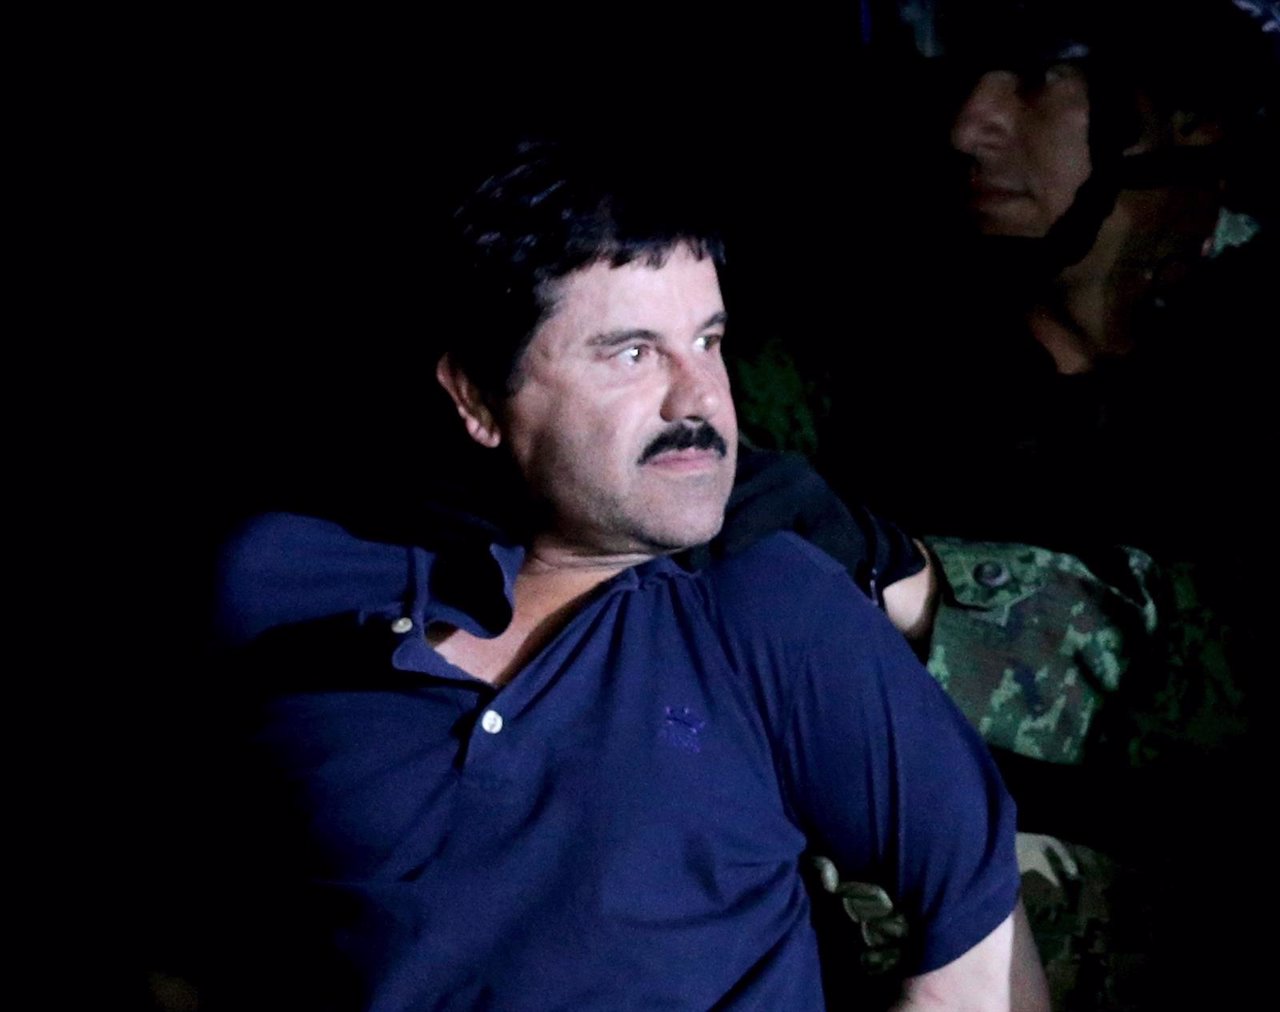 Recaptured drug lord Joaquin "El Chapo" Guzman is escorted by soldiers in Mexico